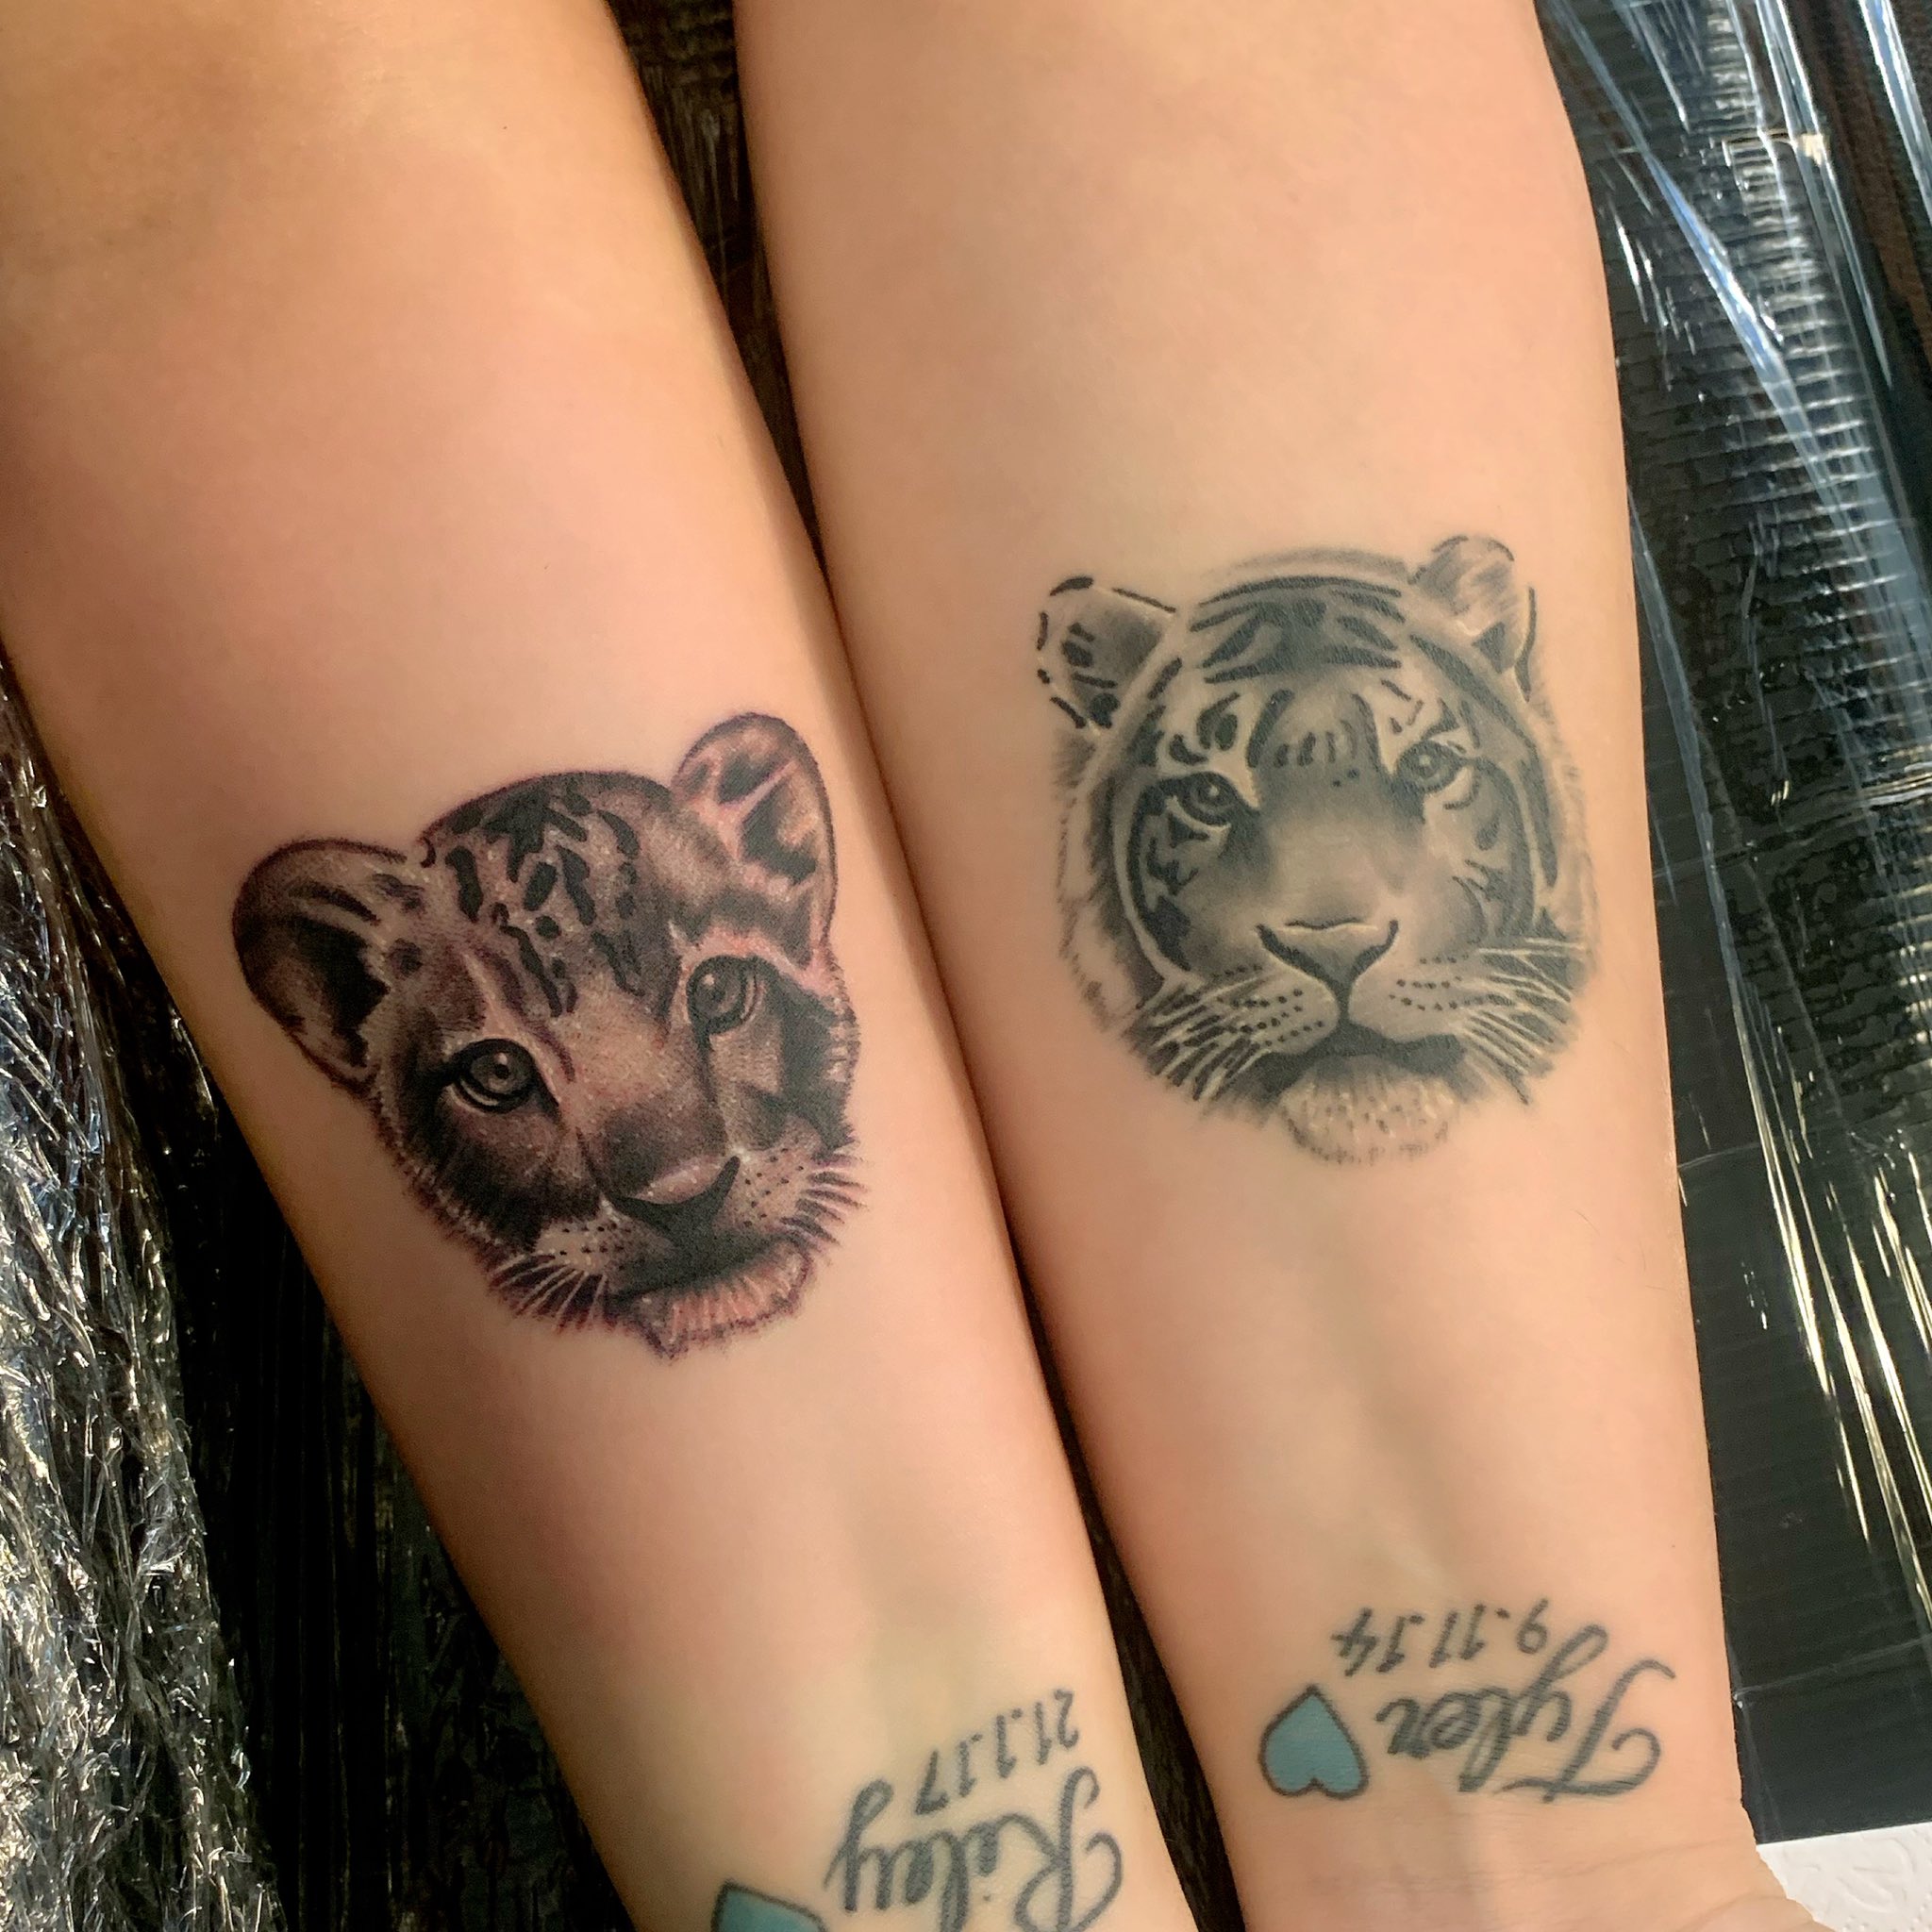 Spit'n Ink Tattoo Studio on Twitter: 